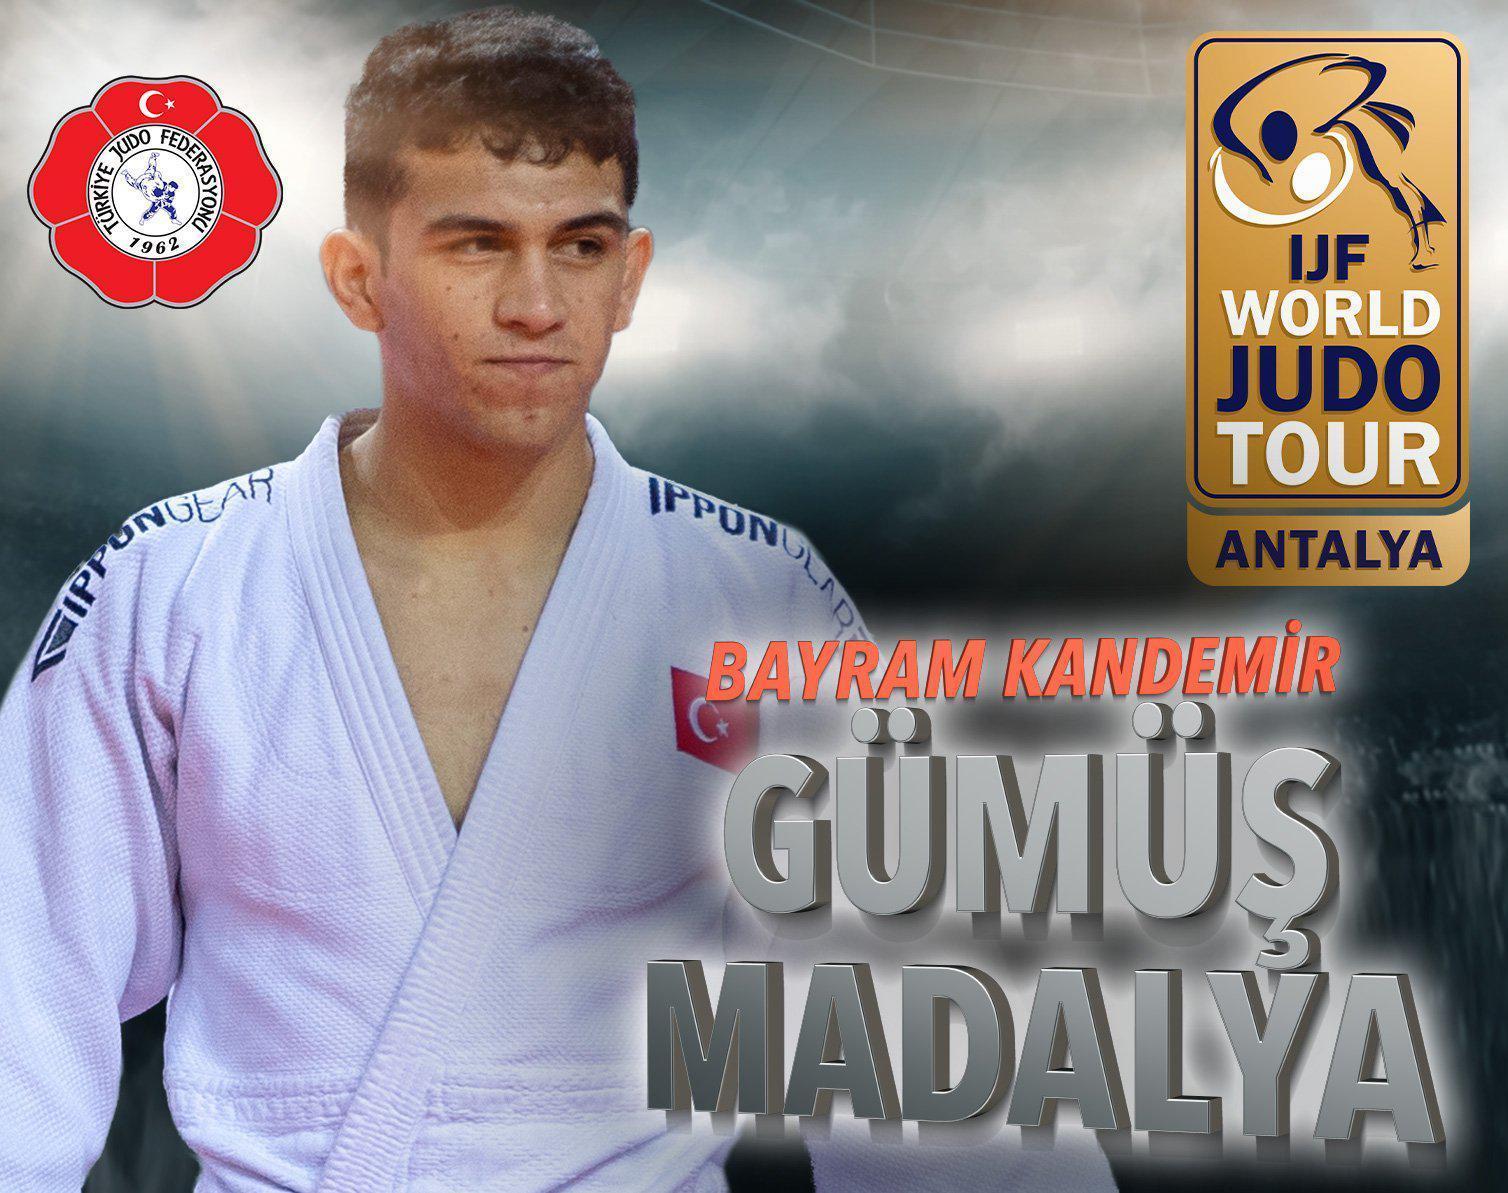 Antalya Grand Slamde Bayram Kandemirden gümüş madalya